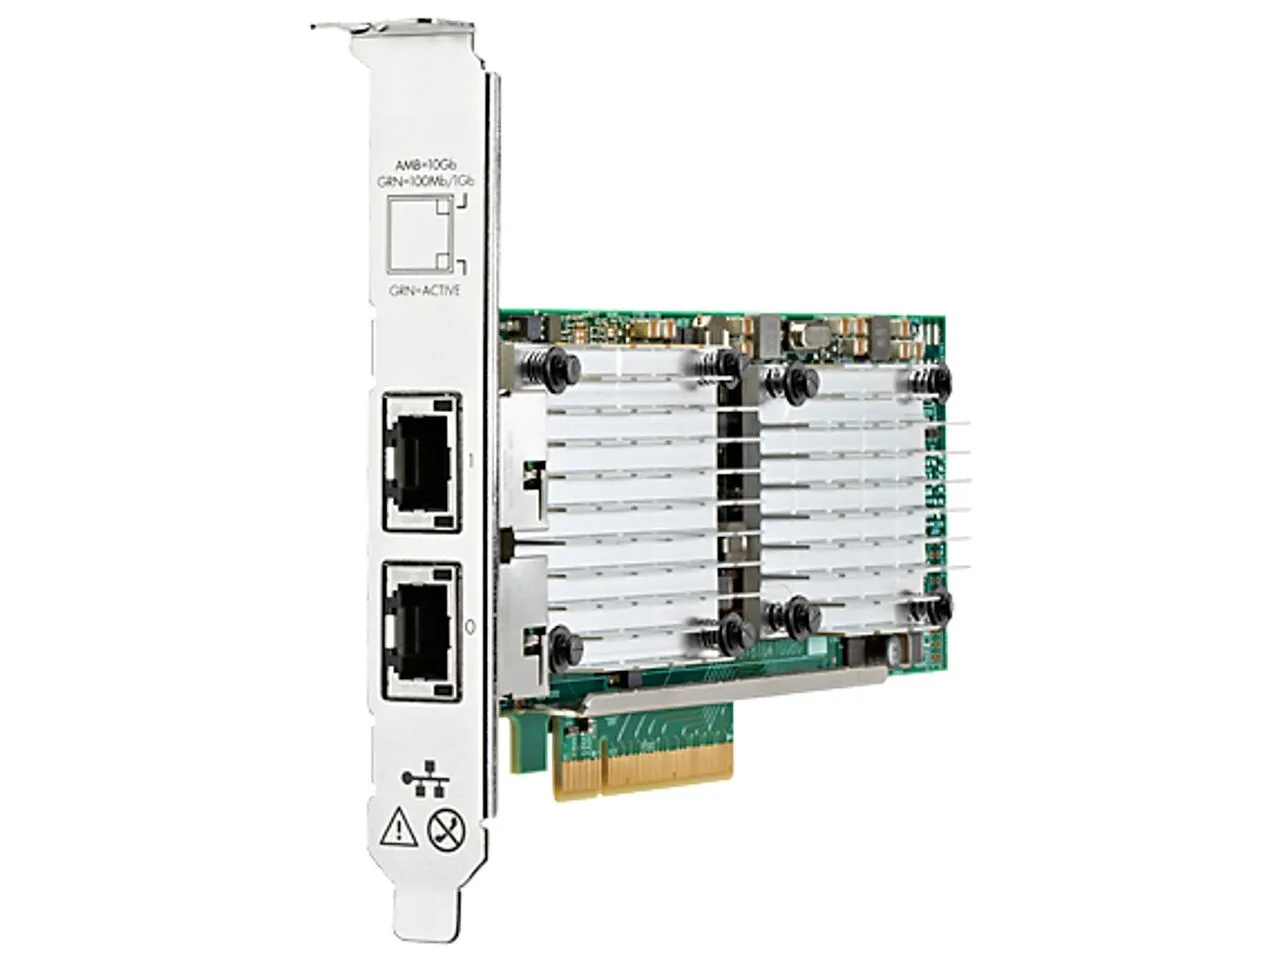   Network Adapter 657128-002 for HPE Proliant Gen9 Server 